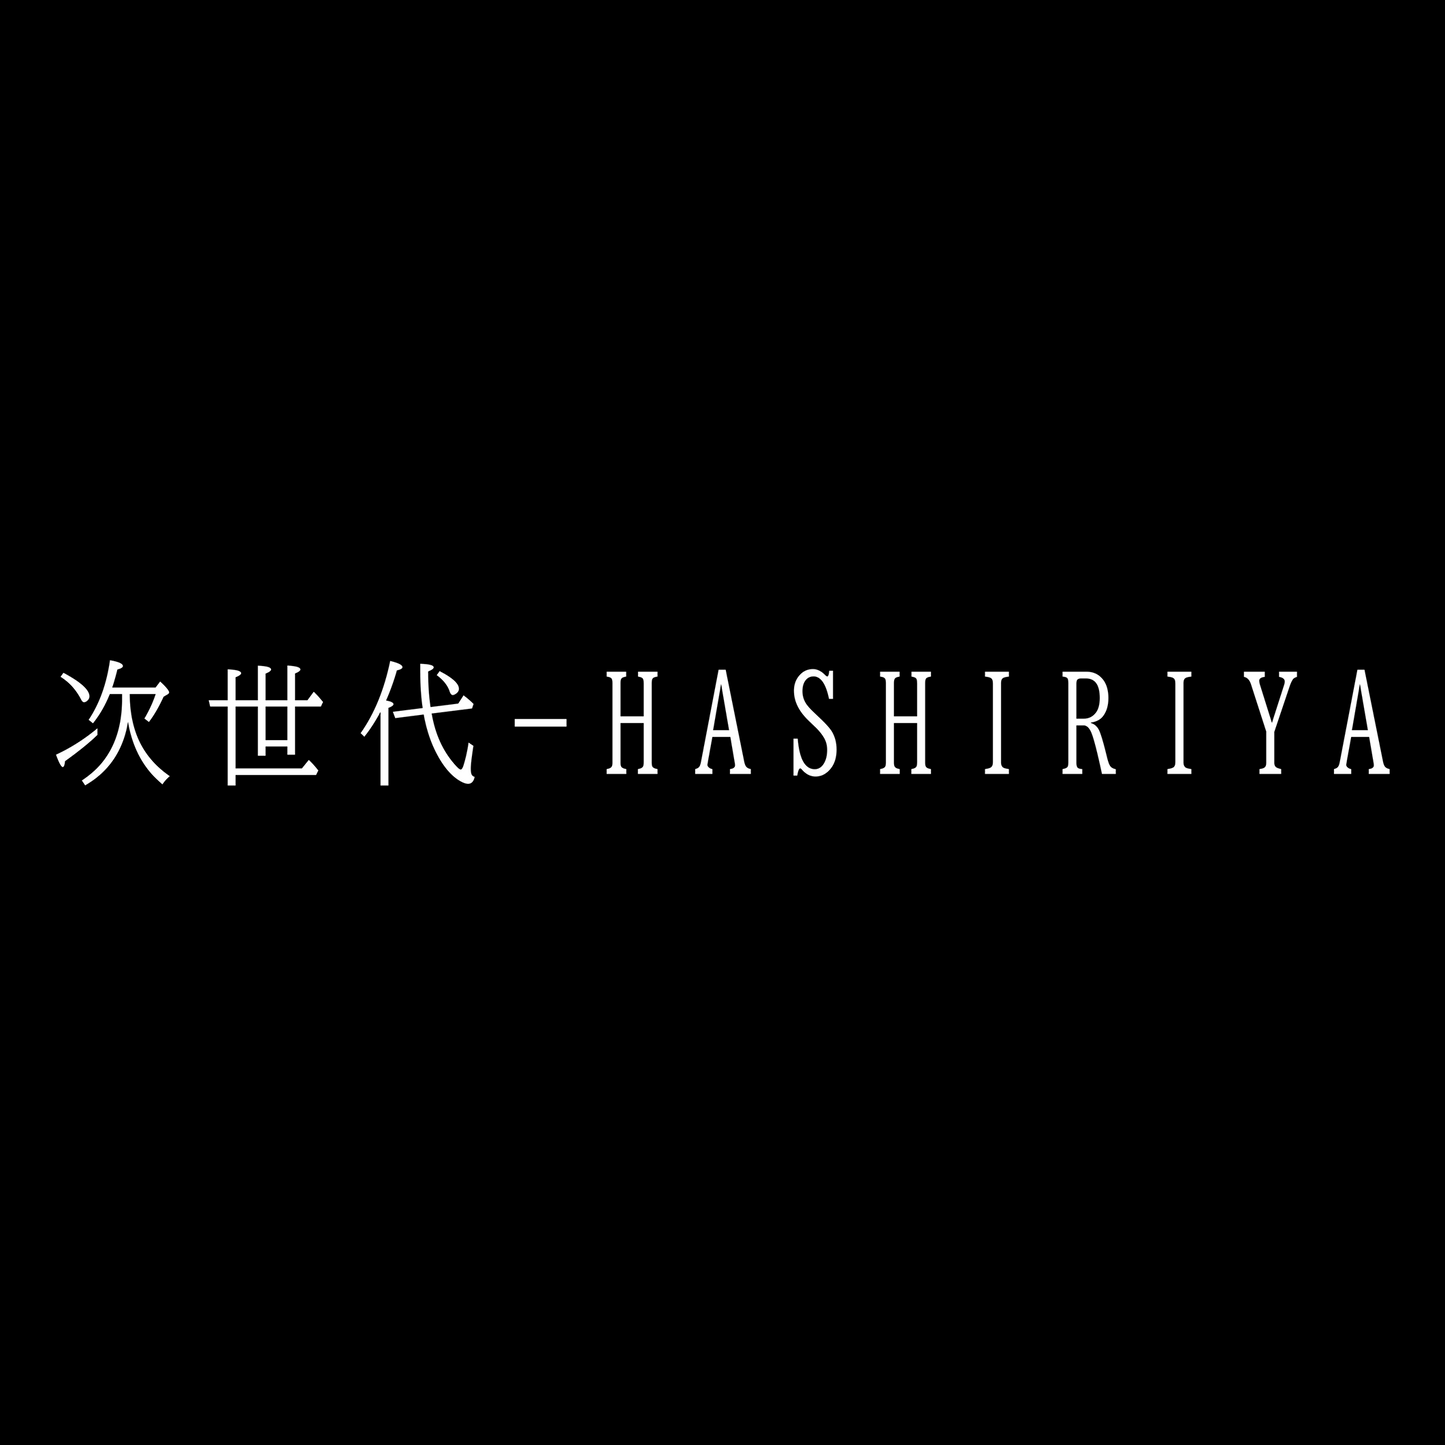 'NEW-HASHIRIYA' Reflective White Sticker